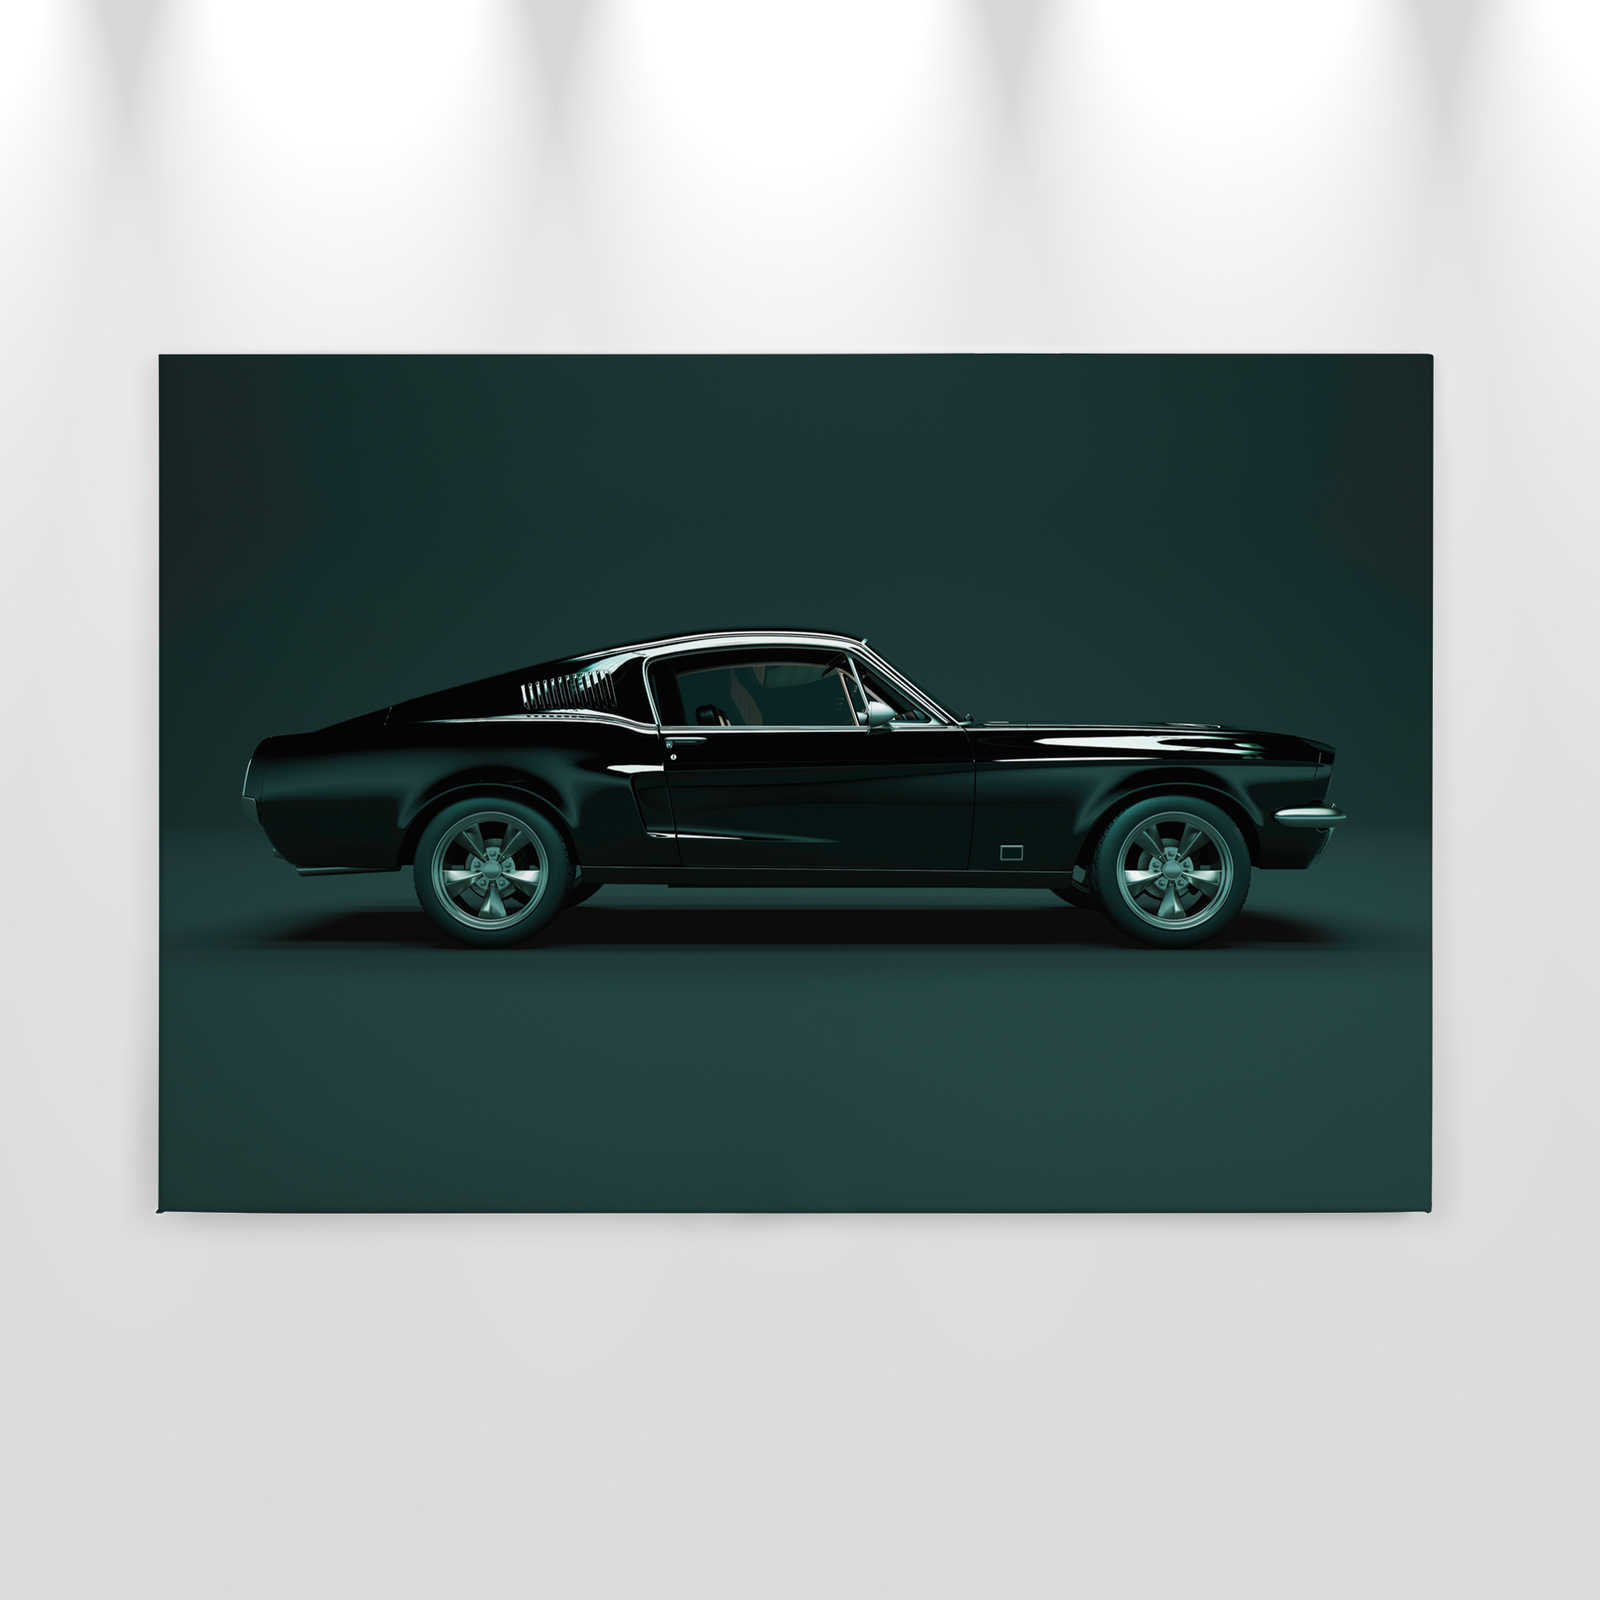             Mustang 1 - Toile, vue latérale Mustang, Vintage - 0,90 m x 0,60 m
        